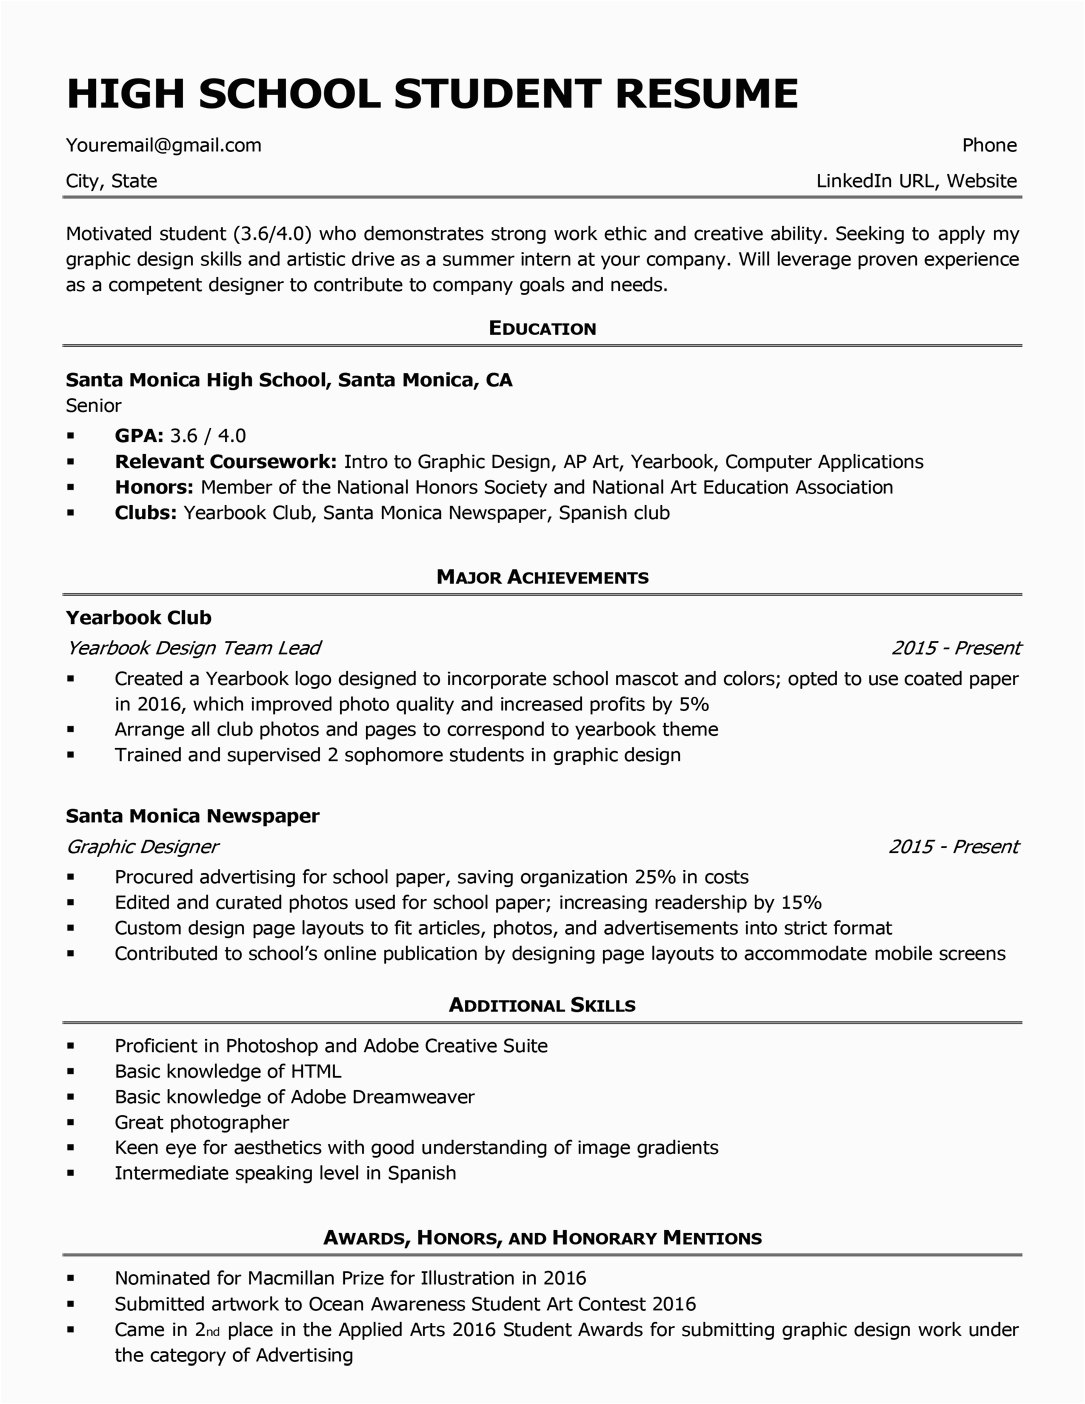 Simple High School Student Resume Template High School Resume Template & Writing Tips